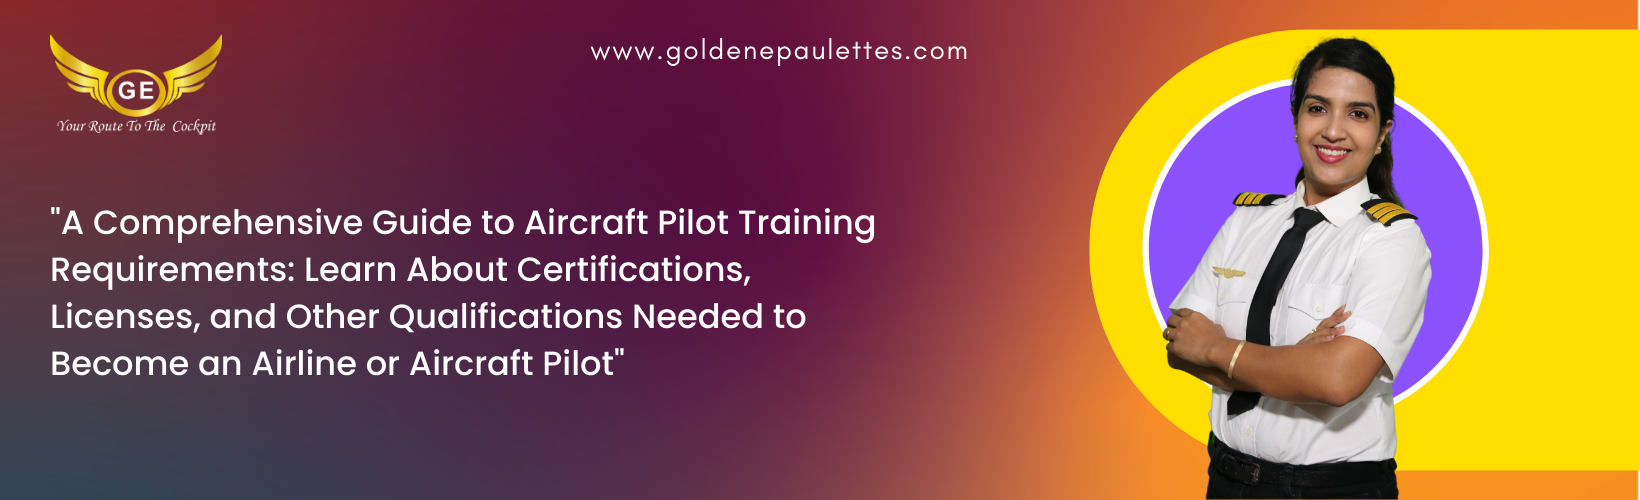 Aircraft Pilot Training Requirements